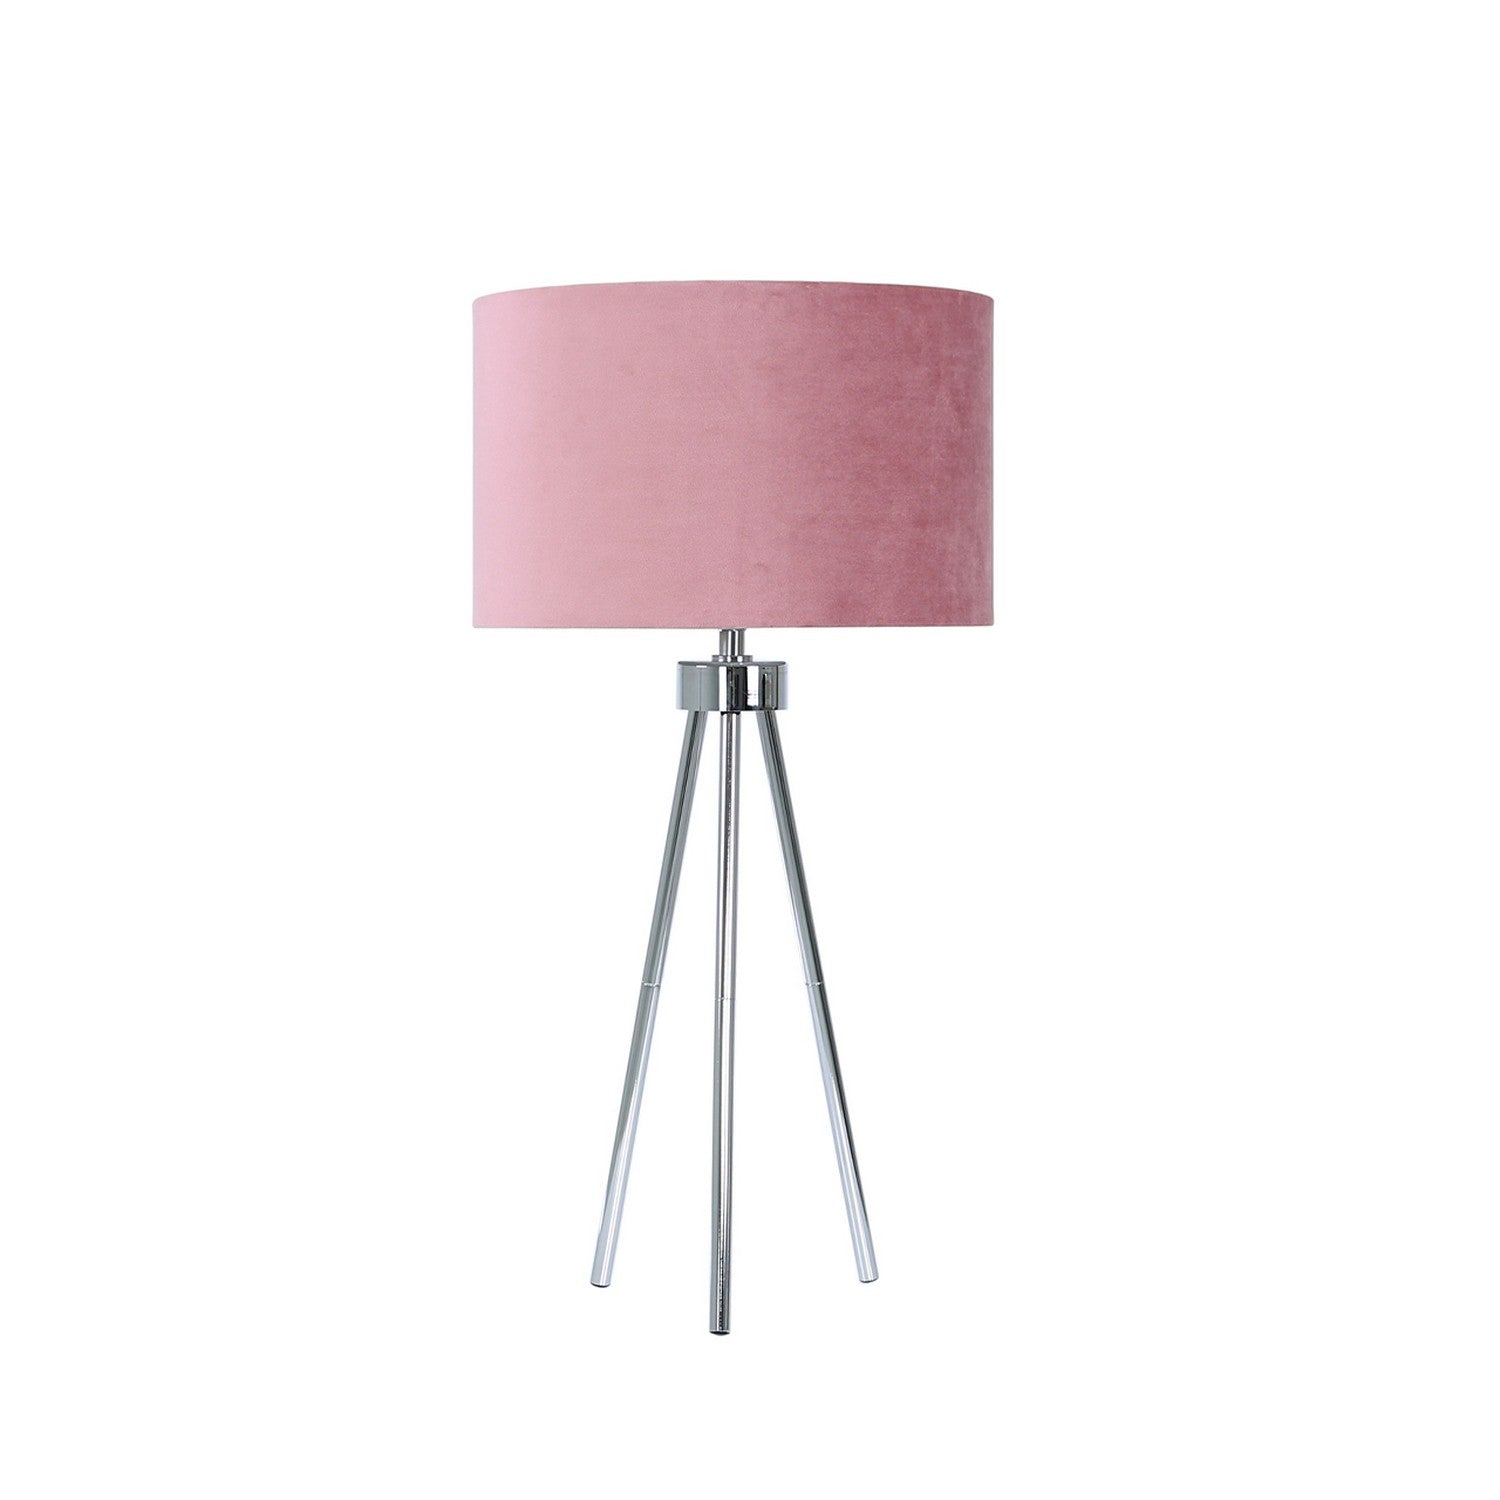 63cm Medium Chrome Tripod Table Lamp with Pink Linen Shade